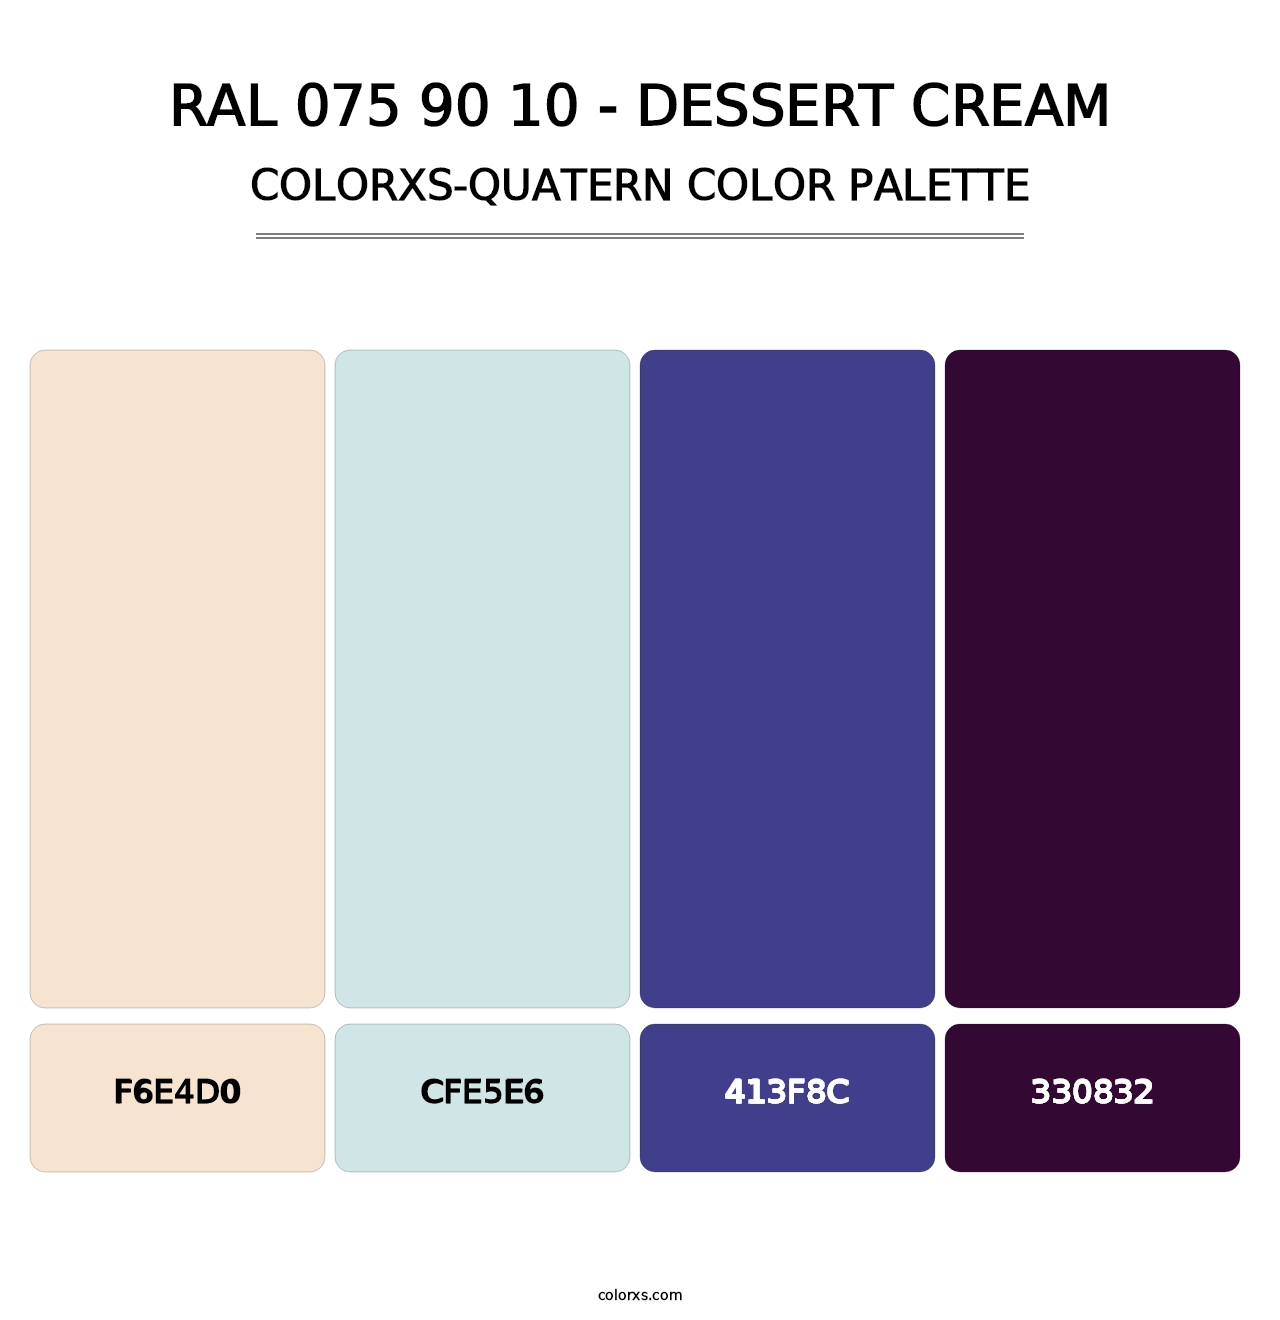 RAL 075 90 10 - Dessert Cream - Colorxs Quatern Palette